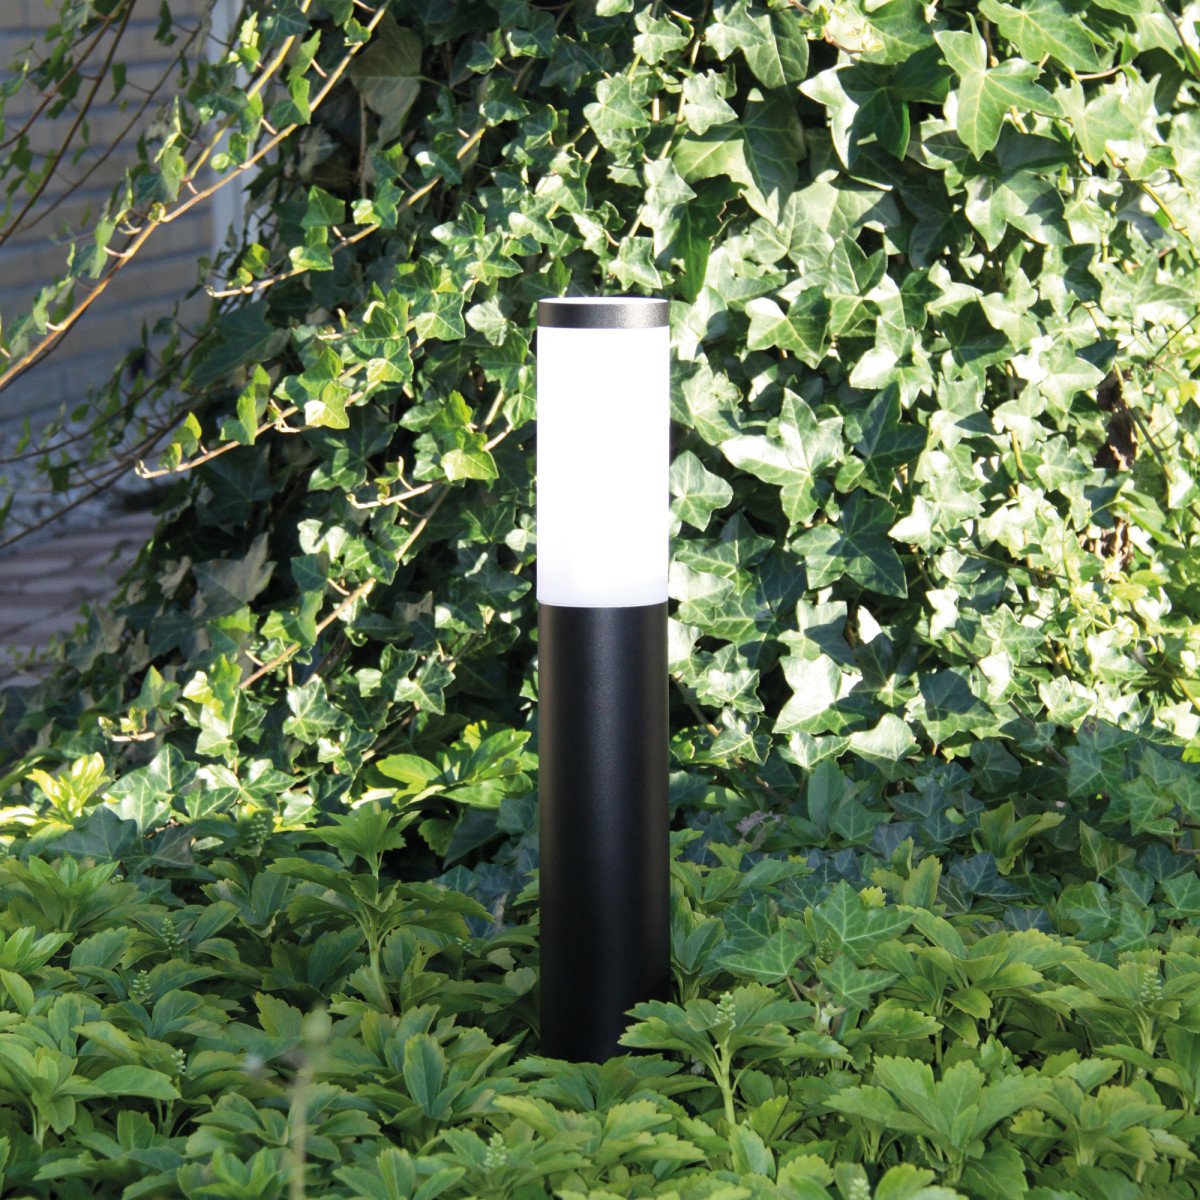 Lampe de jardin Lech 3 (7072d4) acier inoxydable noir